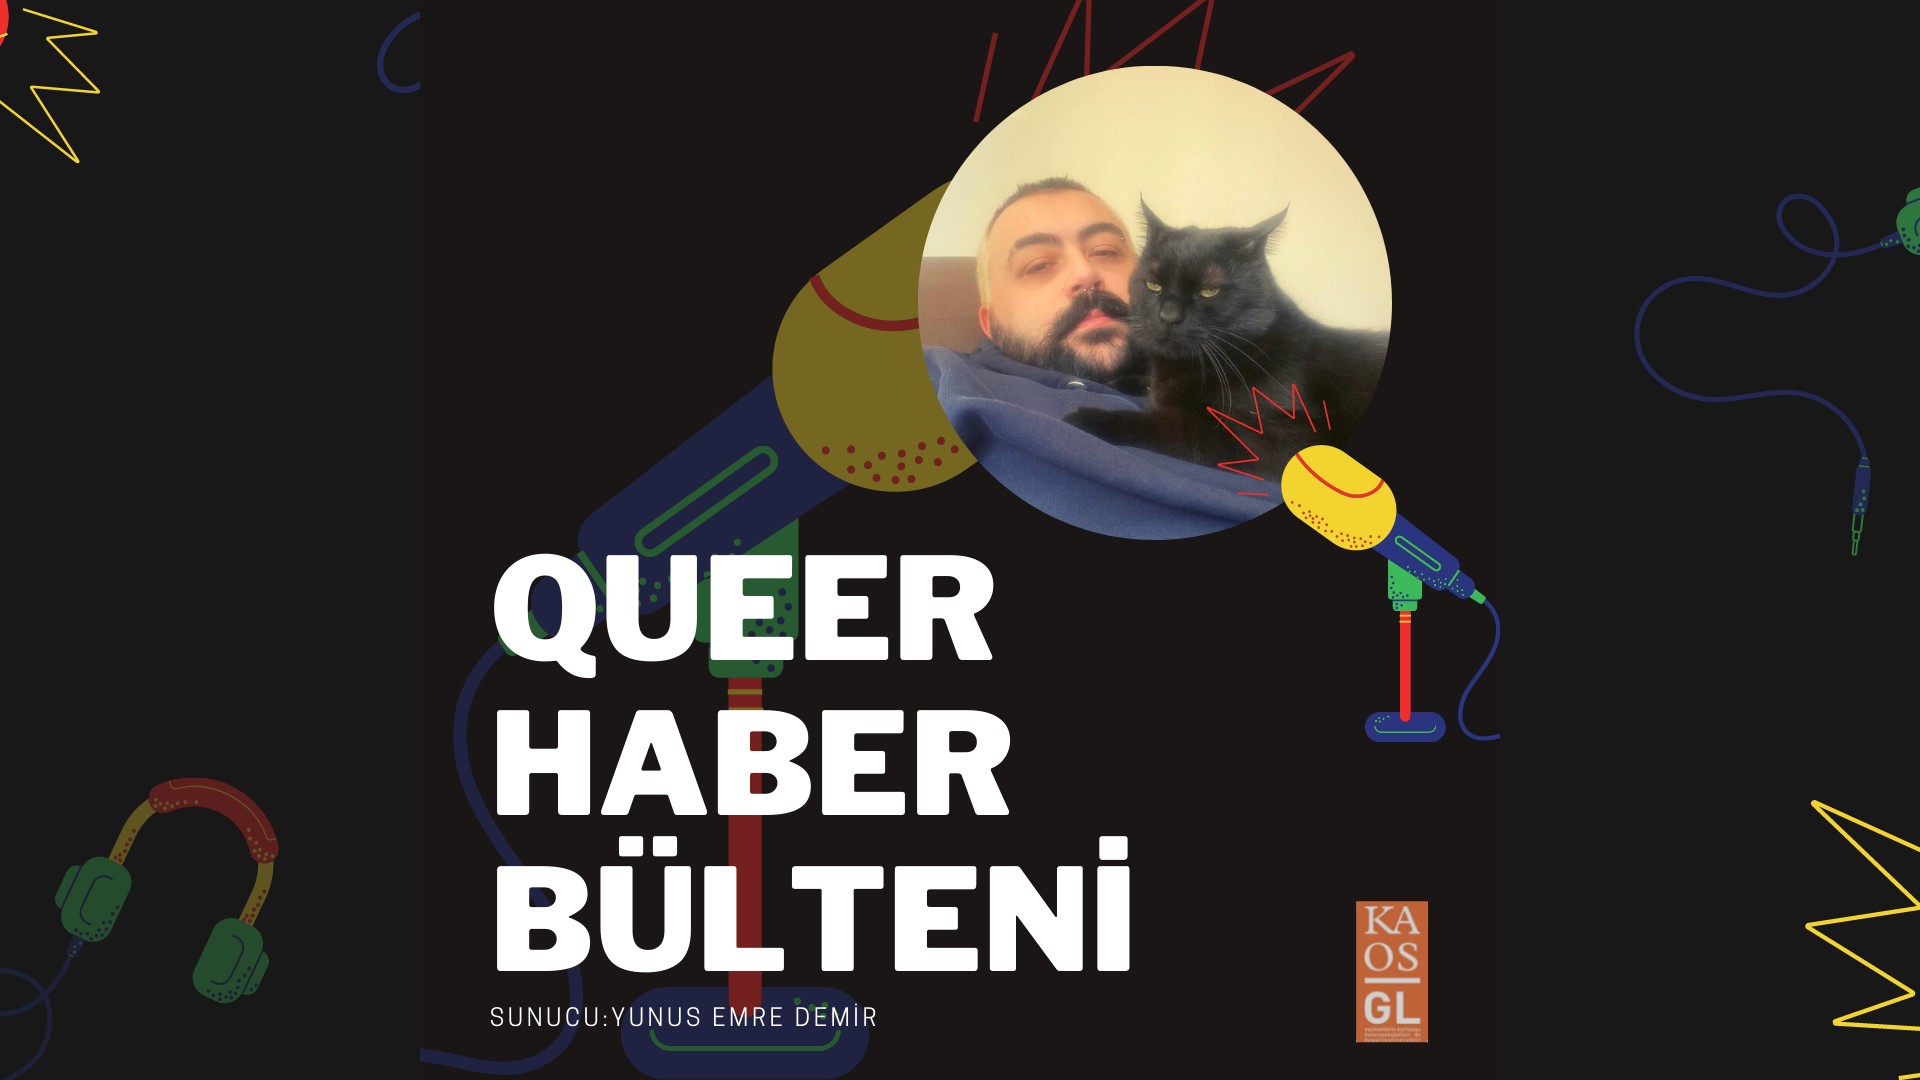 Podcast: Nisan 2022 Queer Haber Bülteni yayında! Kaos GL - LGBTİ+ Haber Portalı